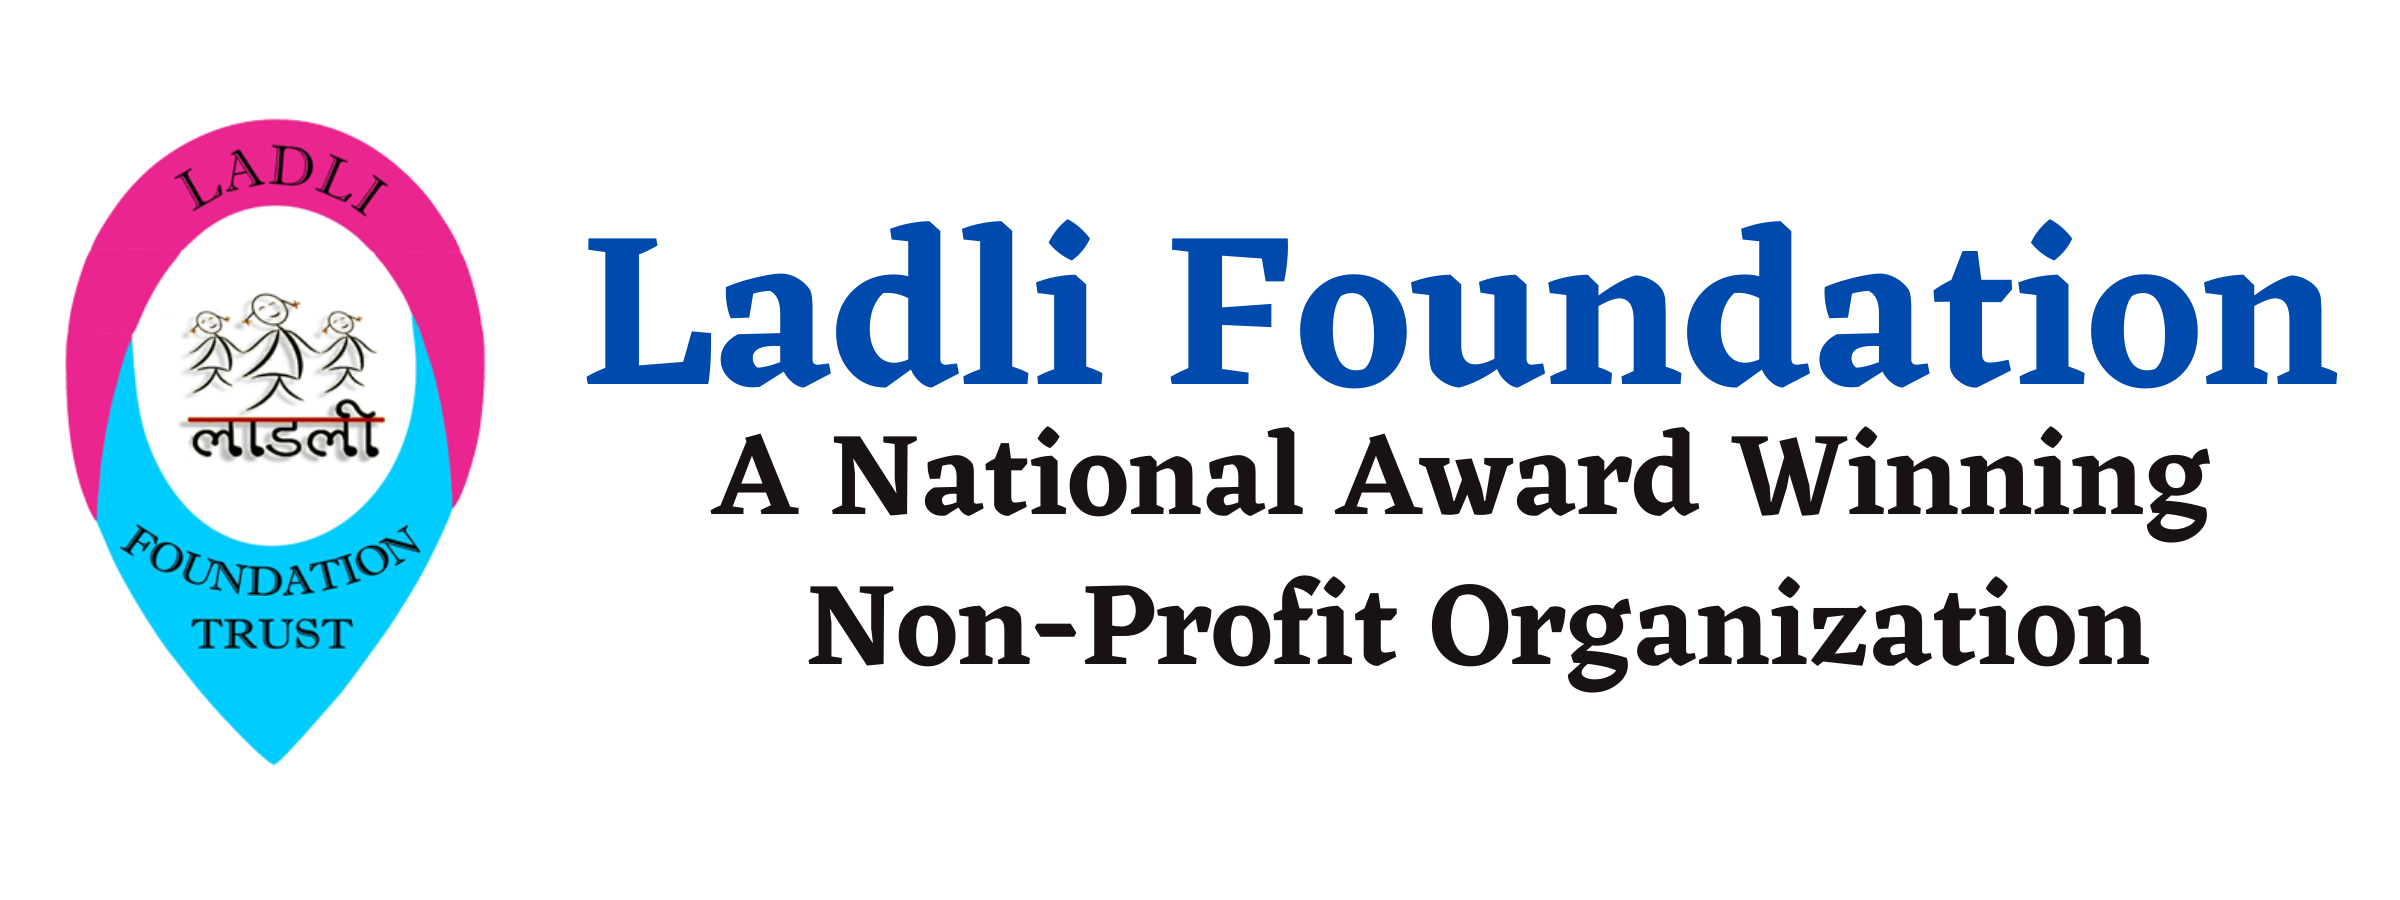 Ladli Foundation Trust logo